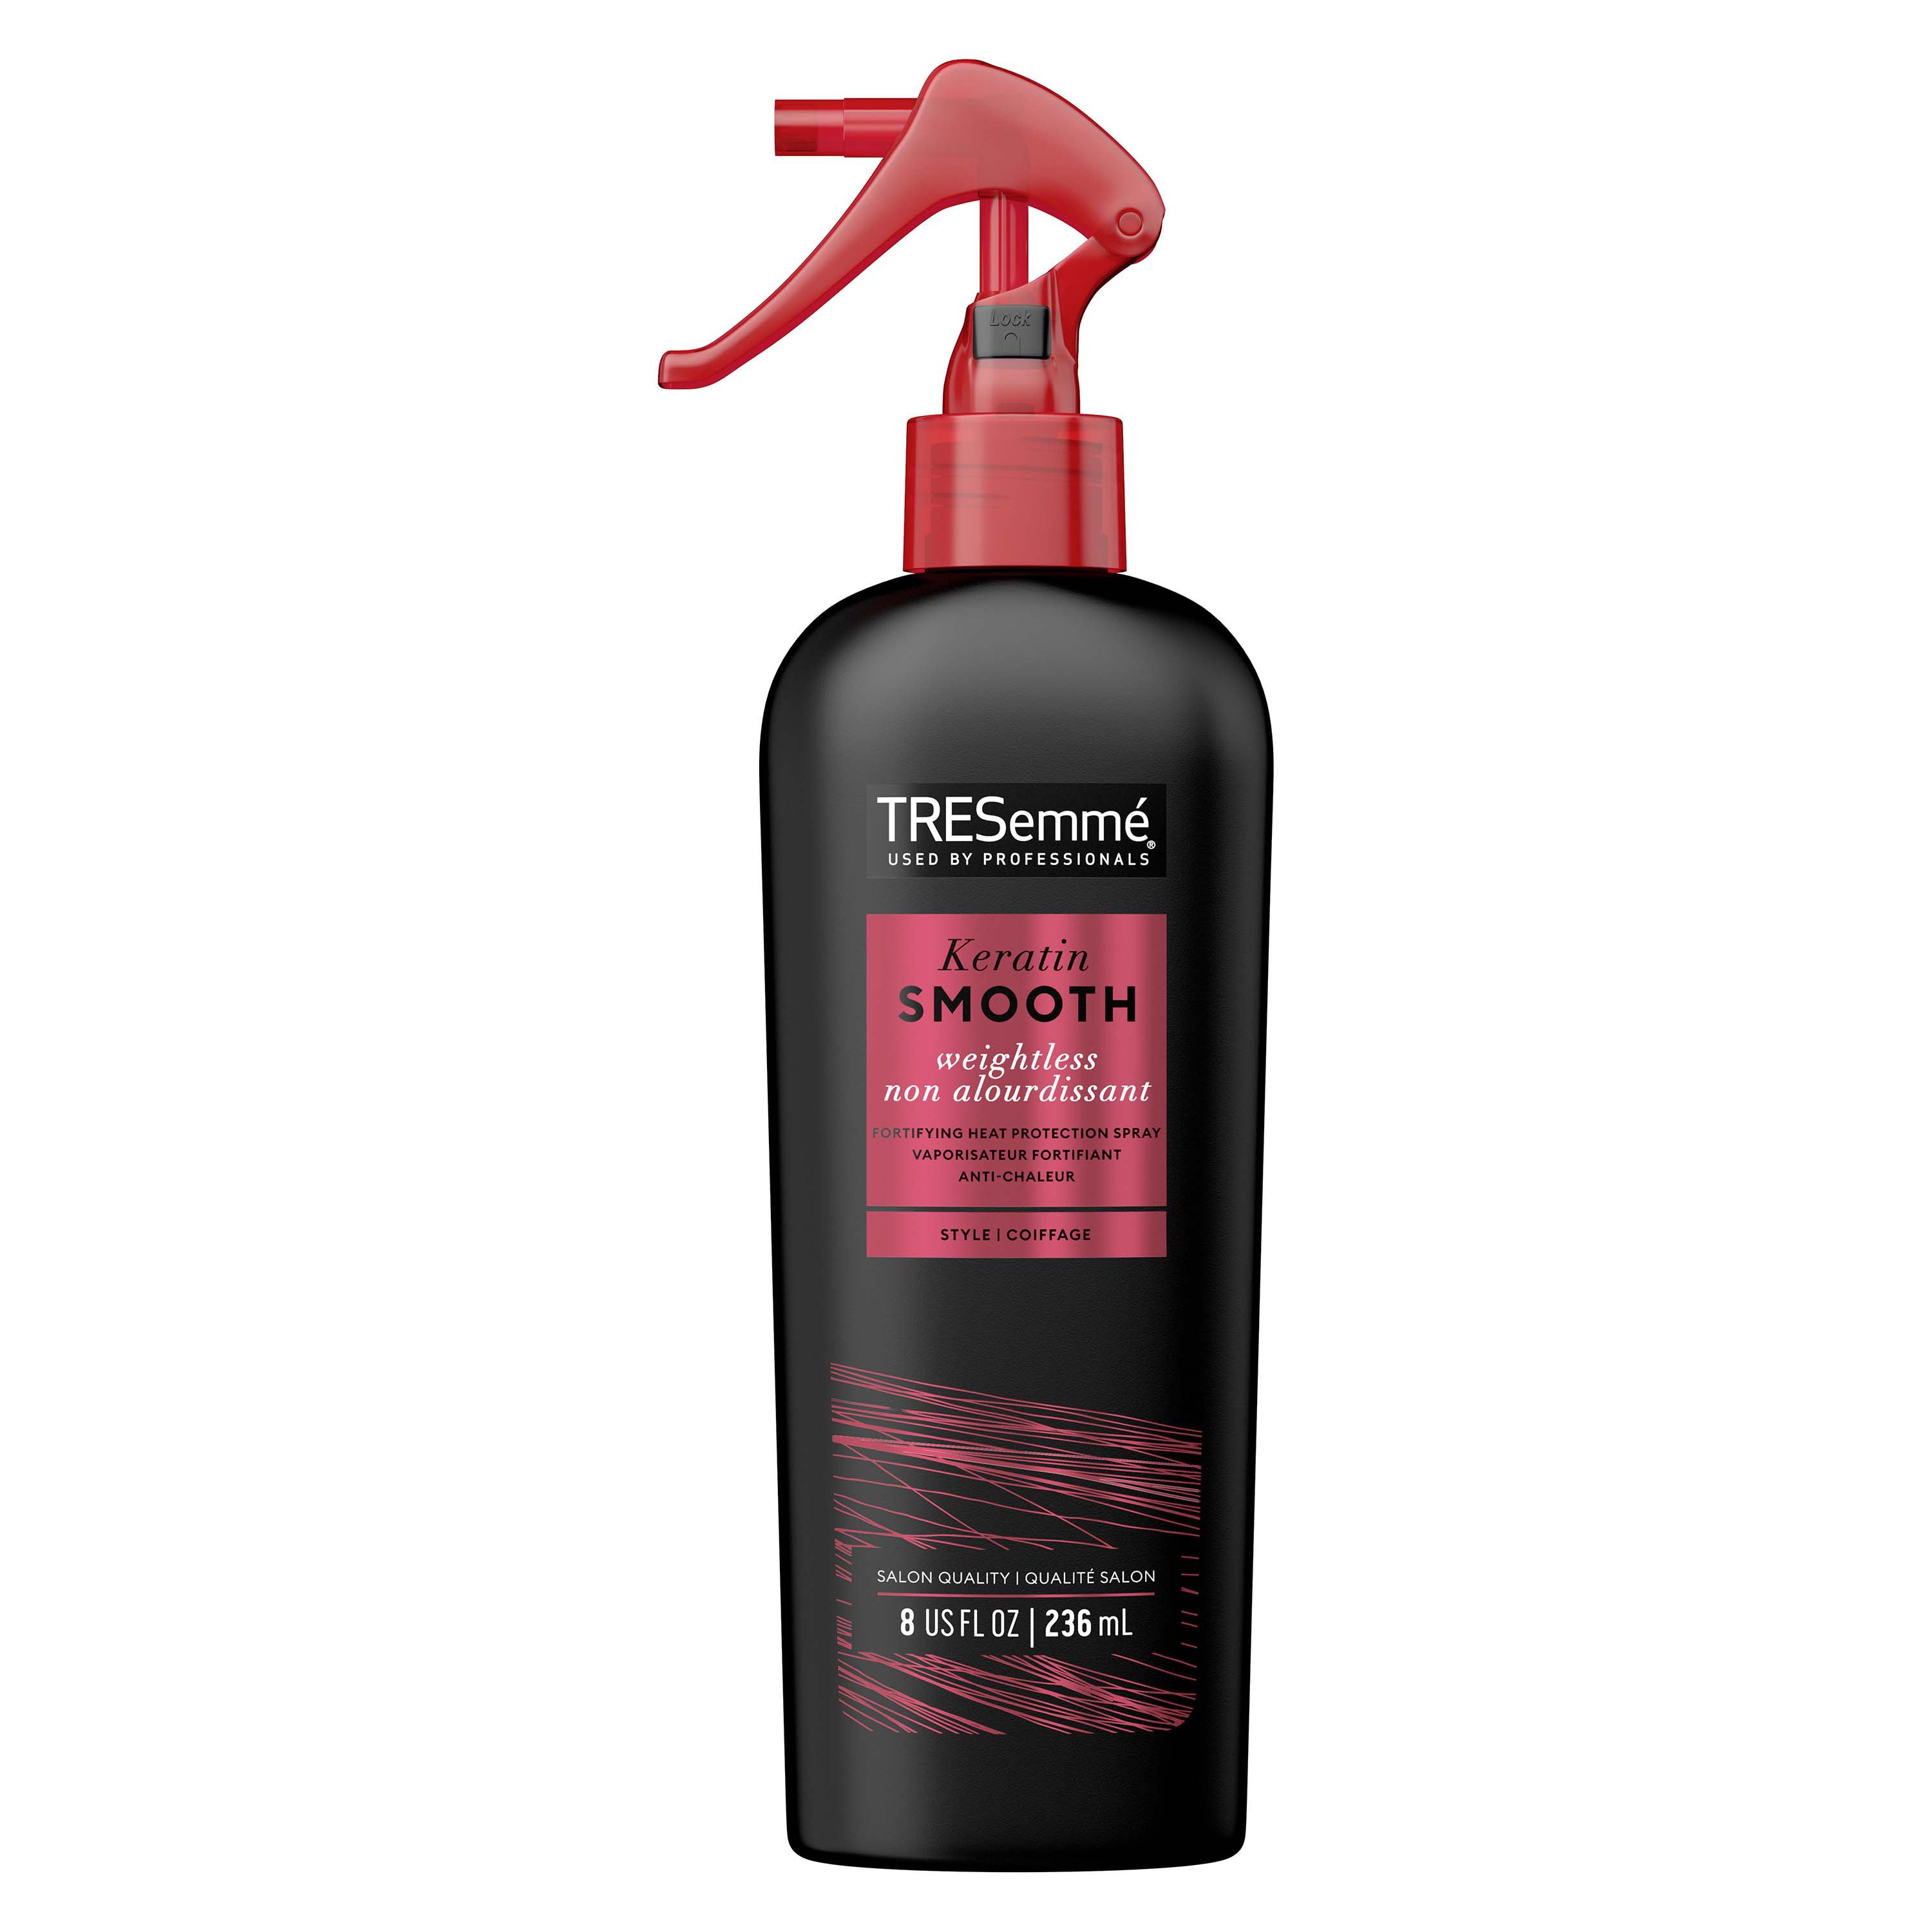 Hairitage Play It Cool Heat Protectant Spray - 6 fl oz